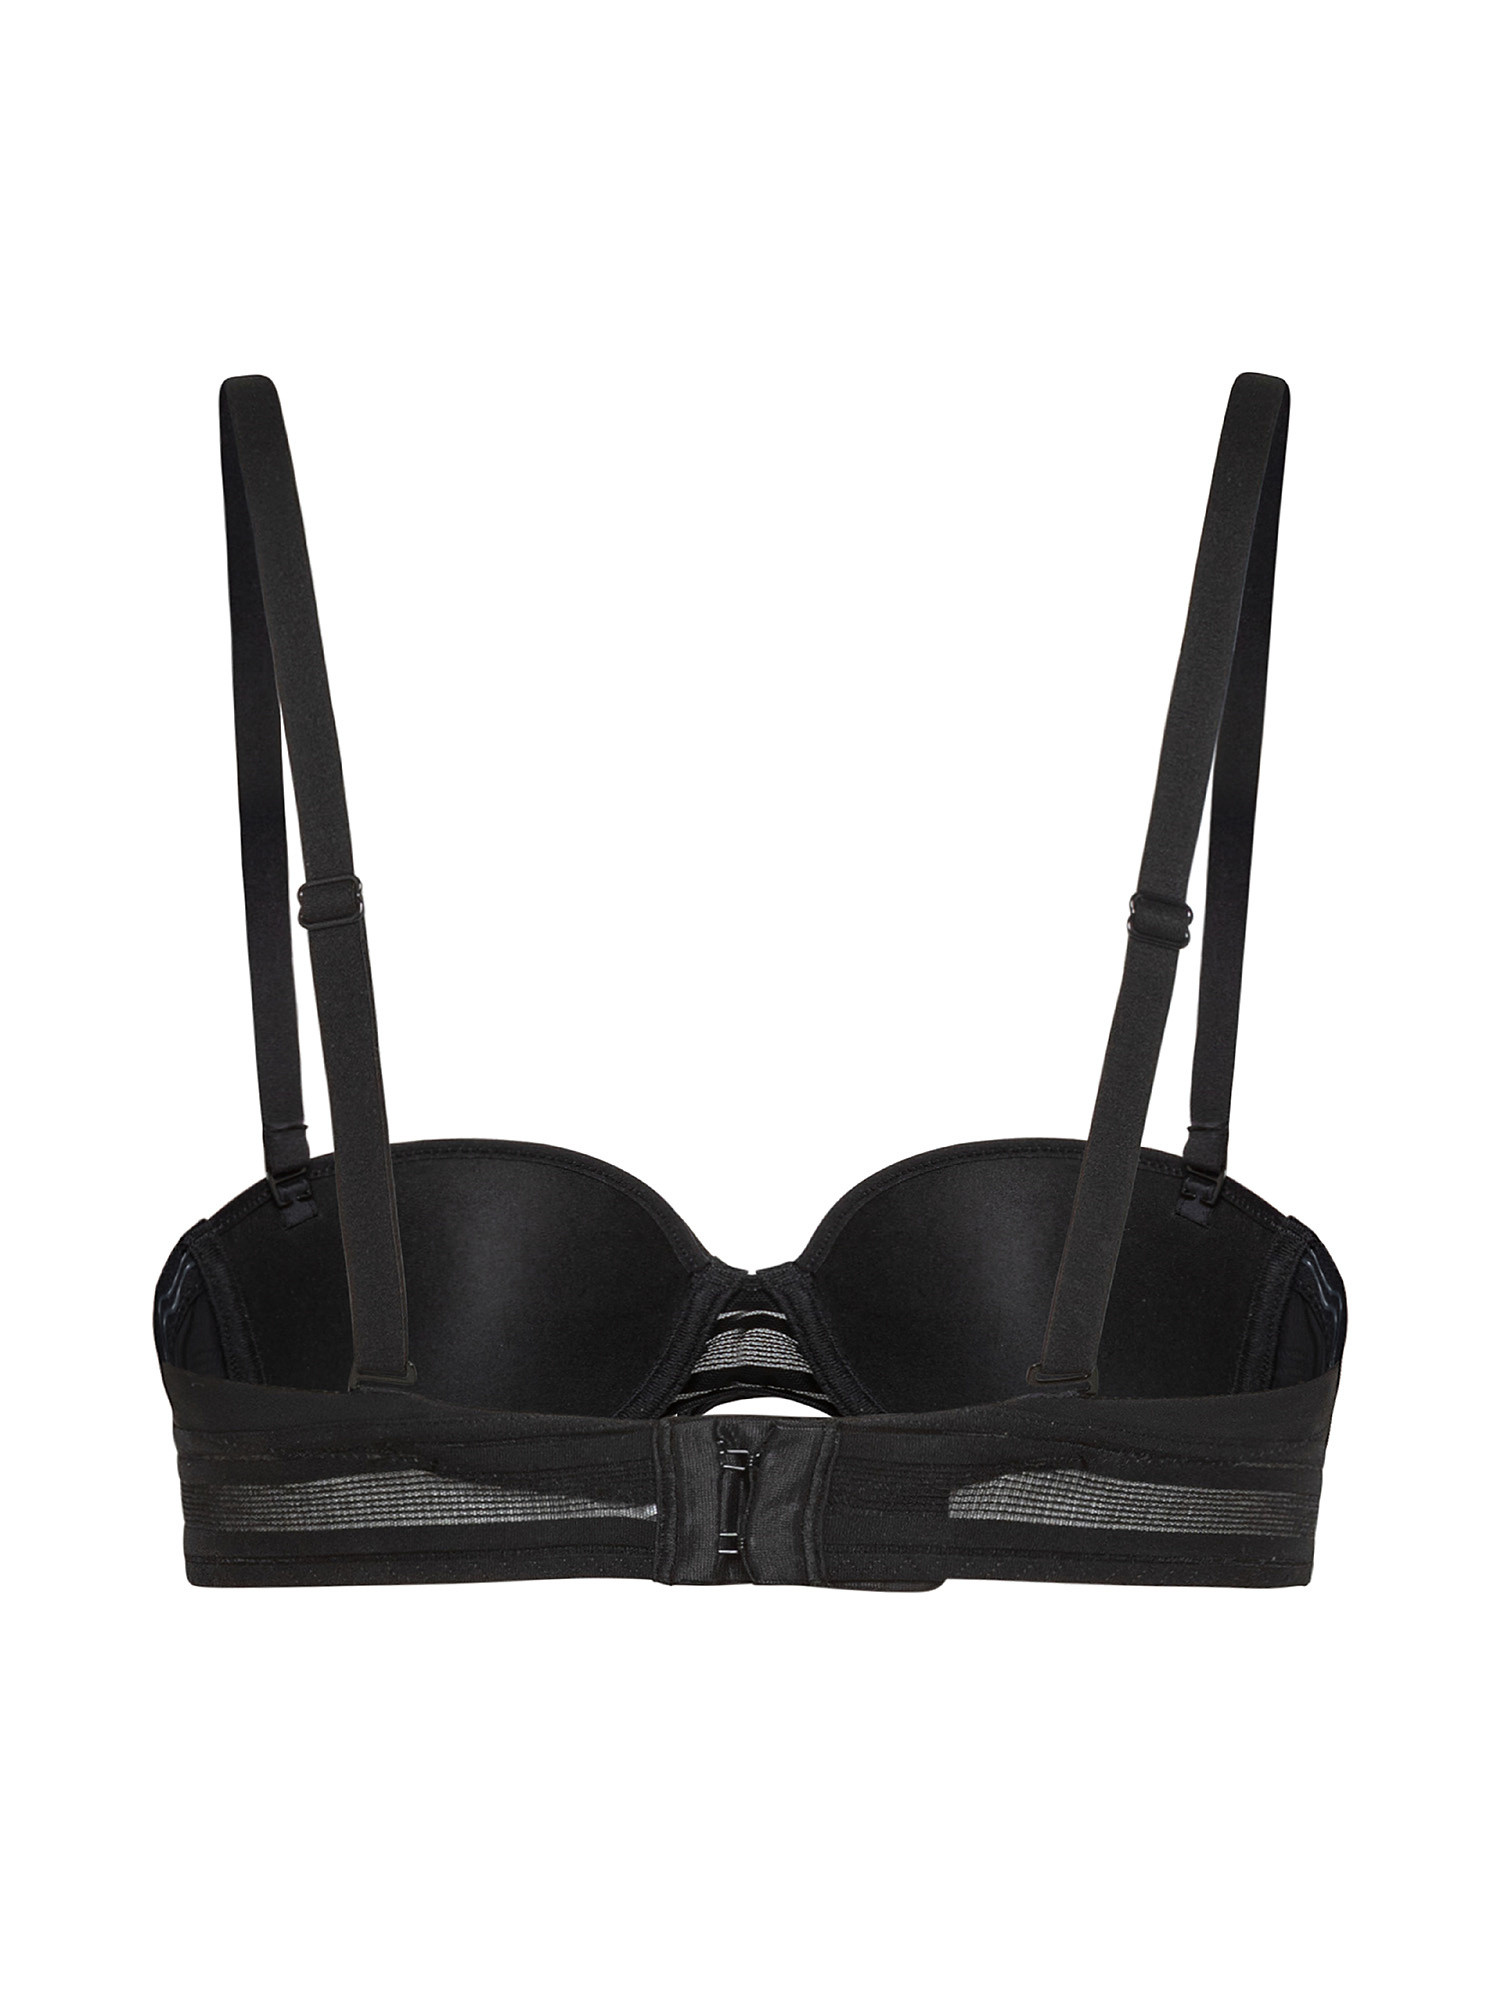 Bandeau bra with removable straps, Black, large image number 1